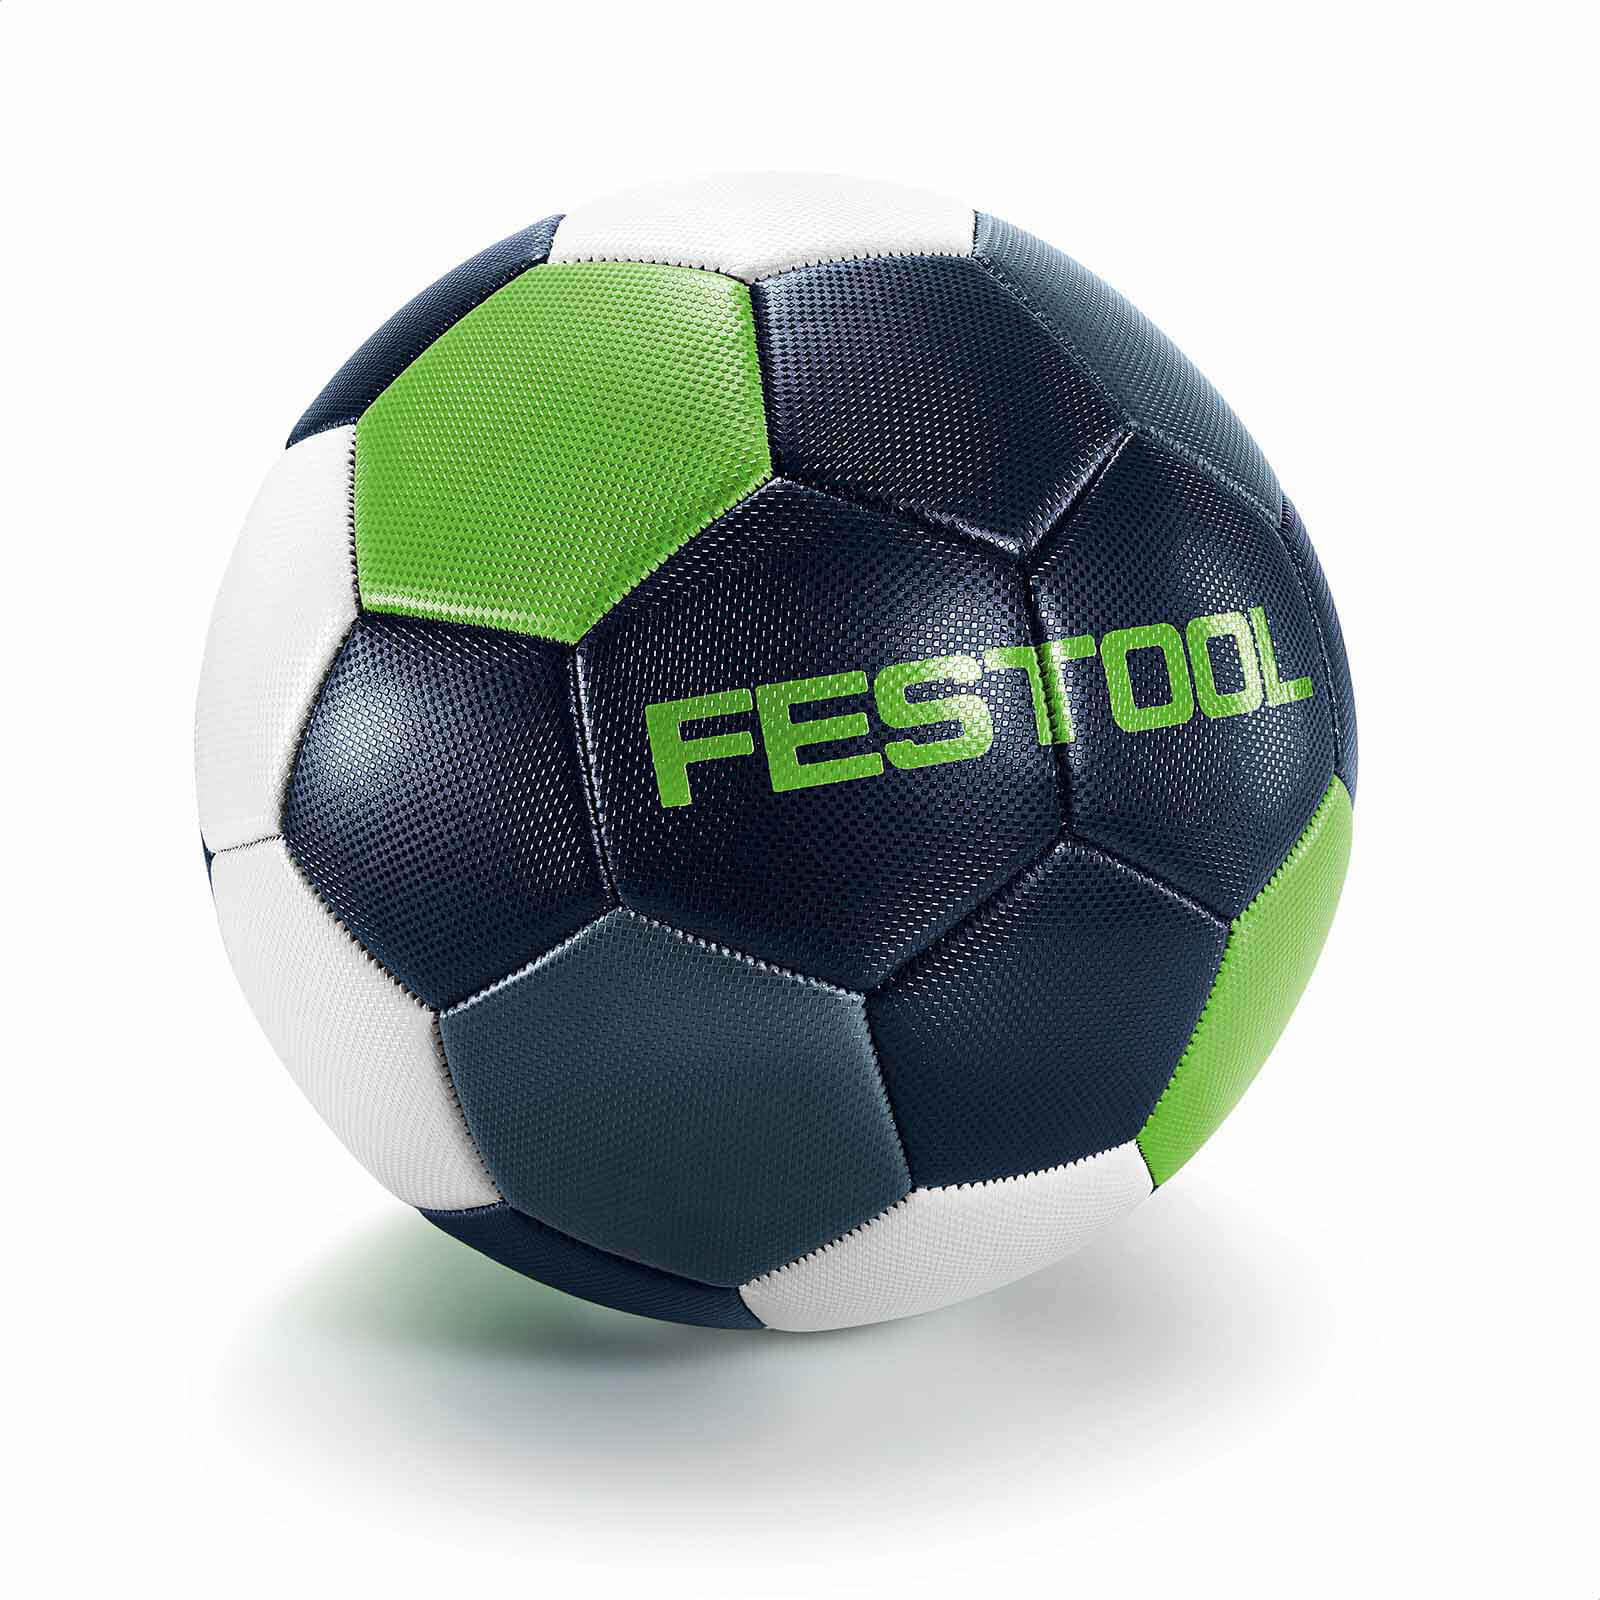 Festool Fan SOC-FT1 Soccer Football